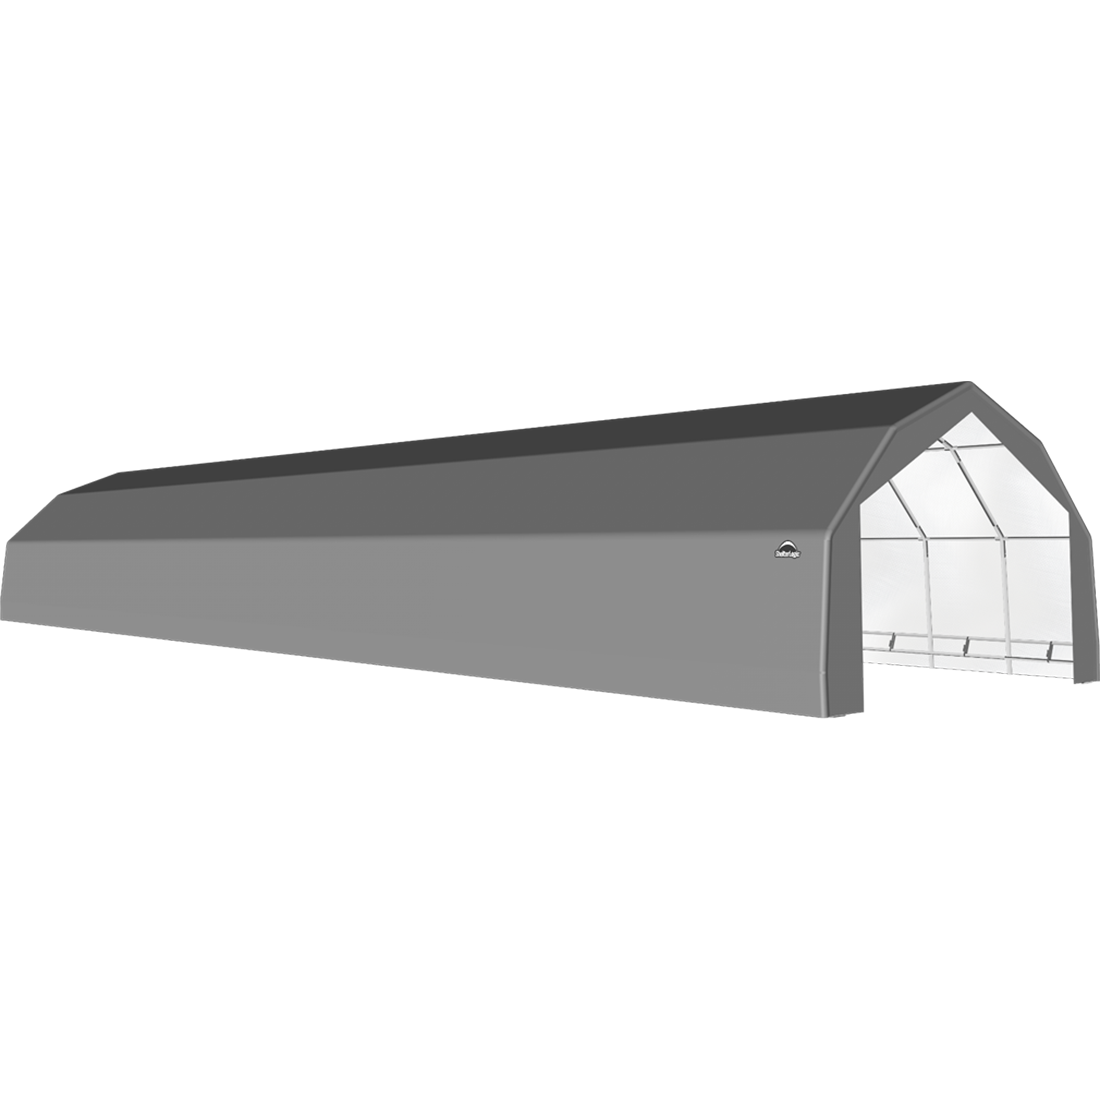 ShelterTech SP Series Barn Shelter, 20 ft. x 72 ft. x 12 ft. Heavy Duty PVC 14.5 oz. Gray